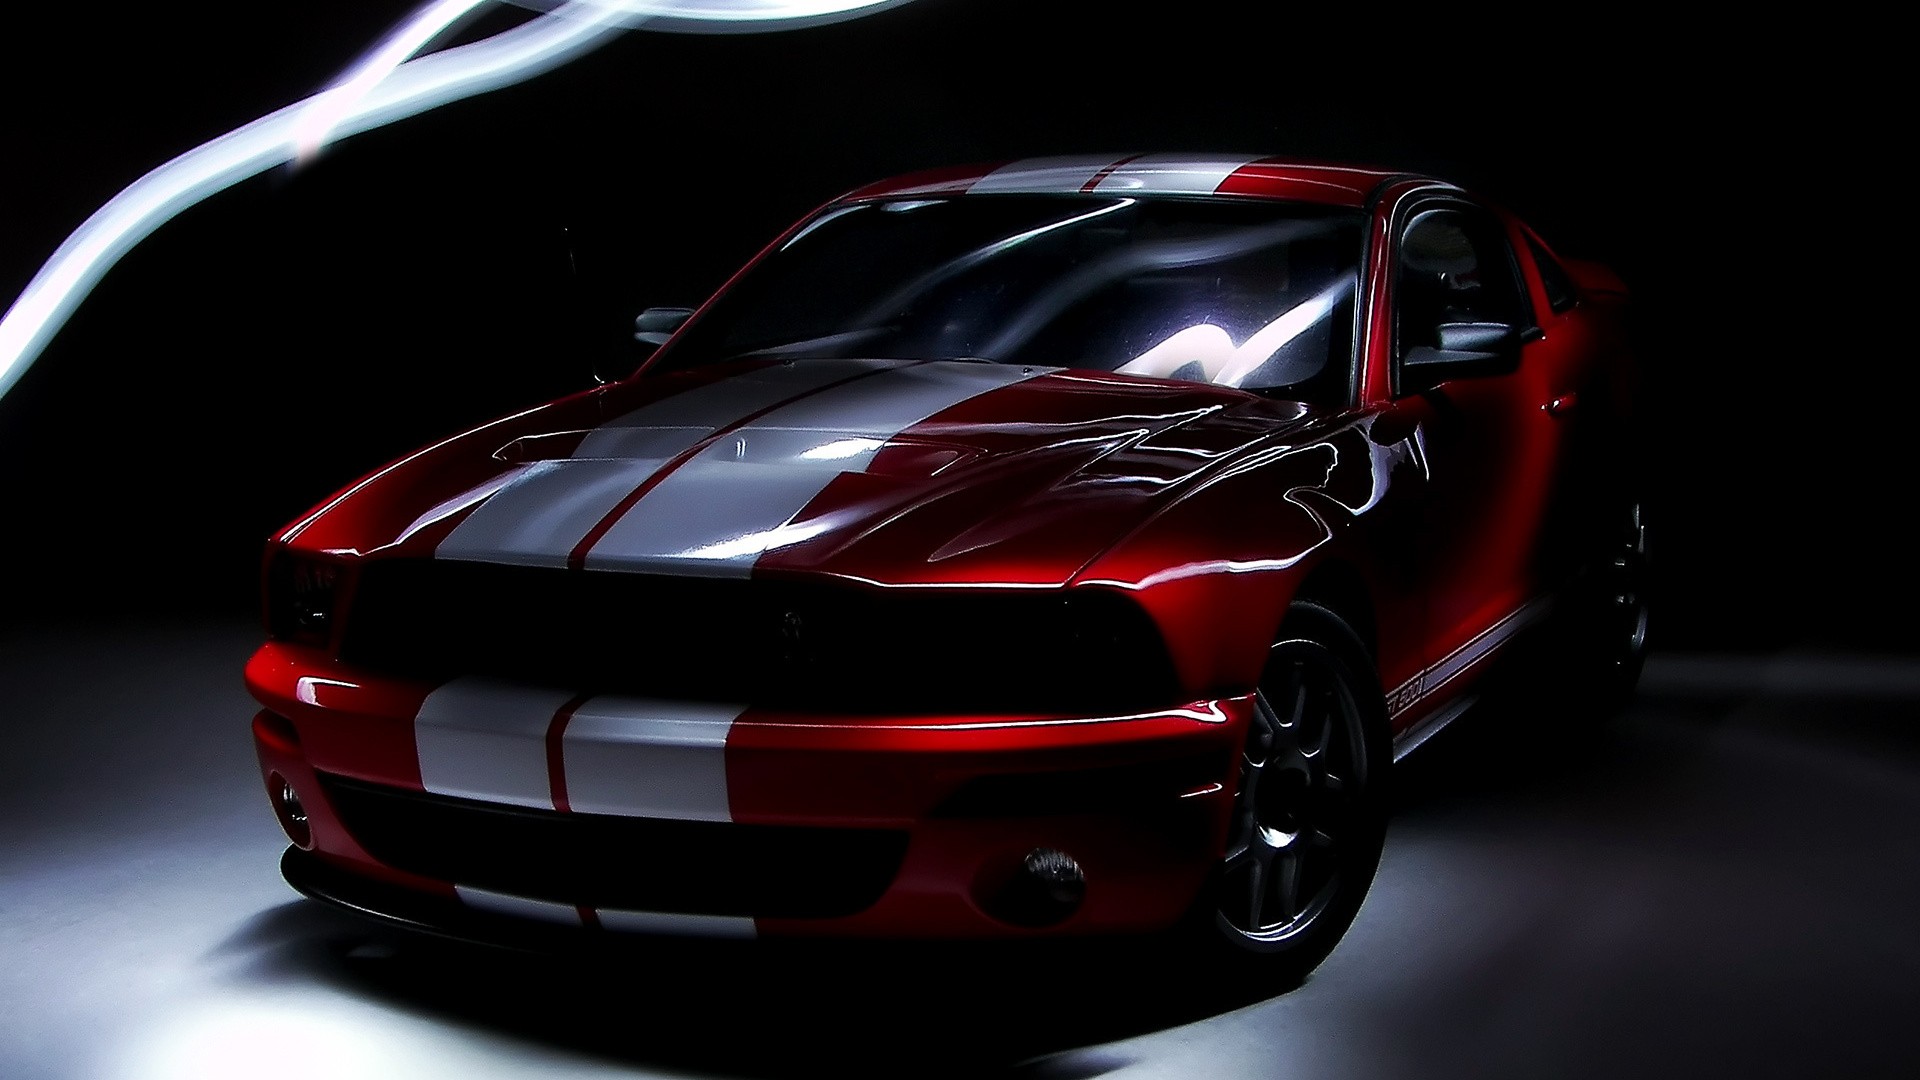 48+] Ford Mustang Shelby Desktop Wallpaper - WallpaperSafari